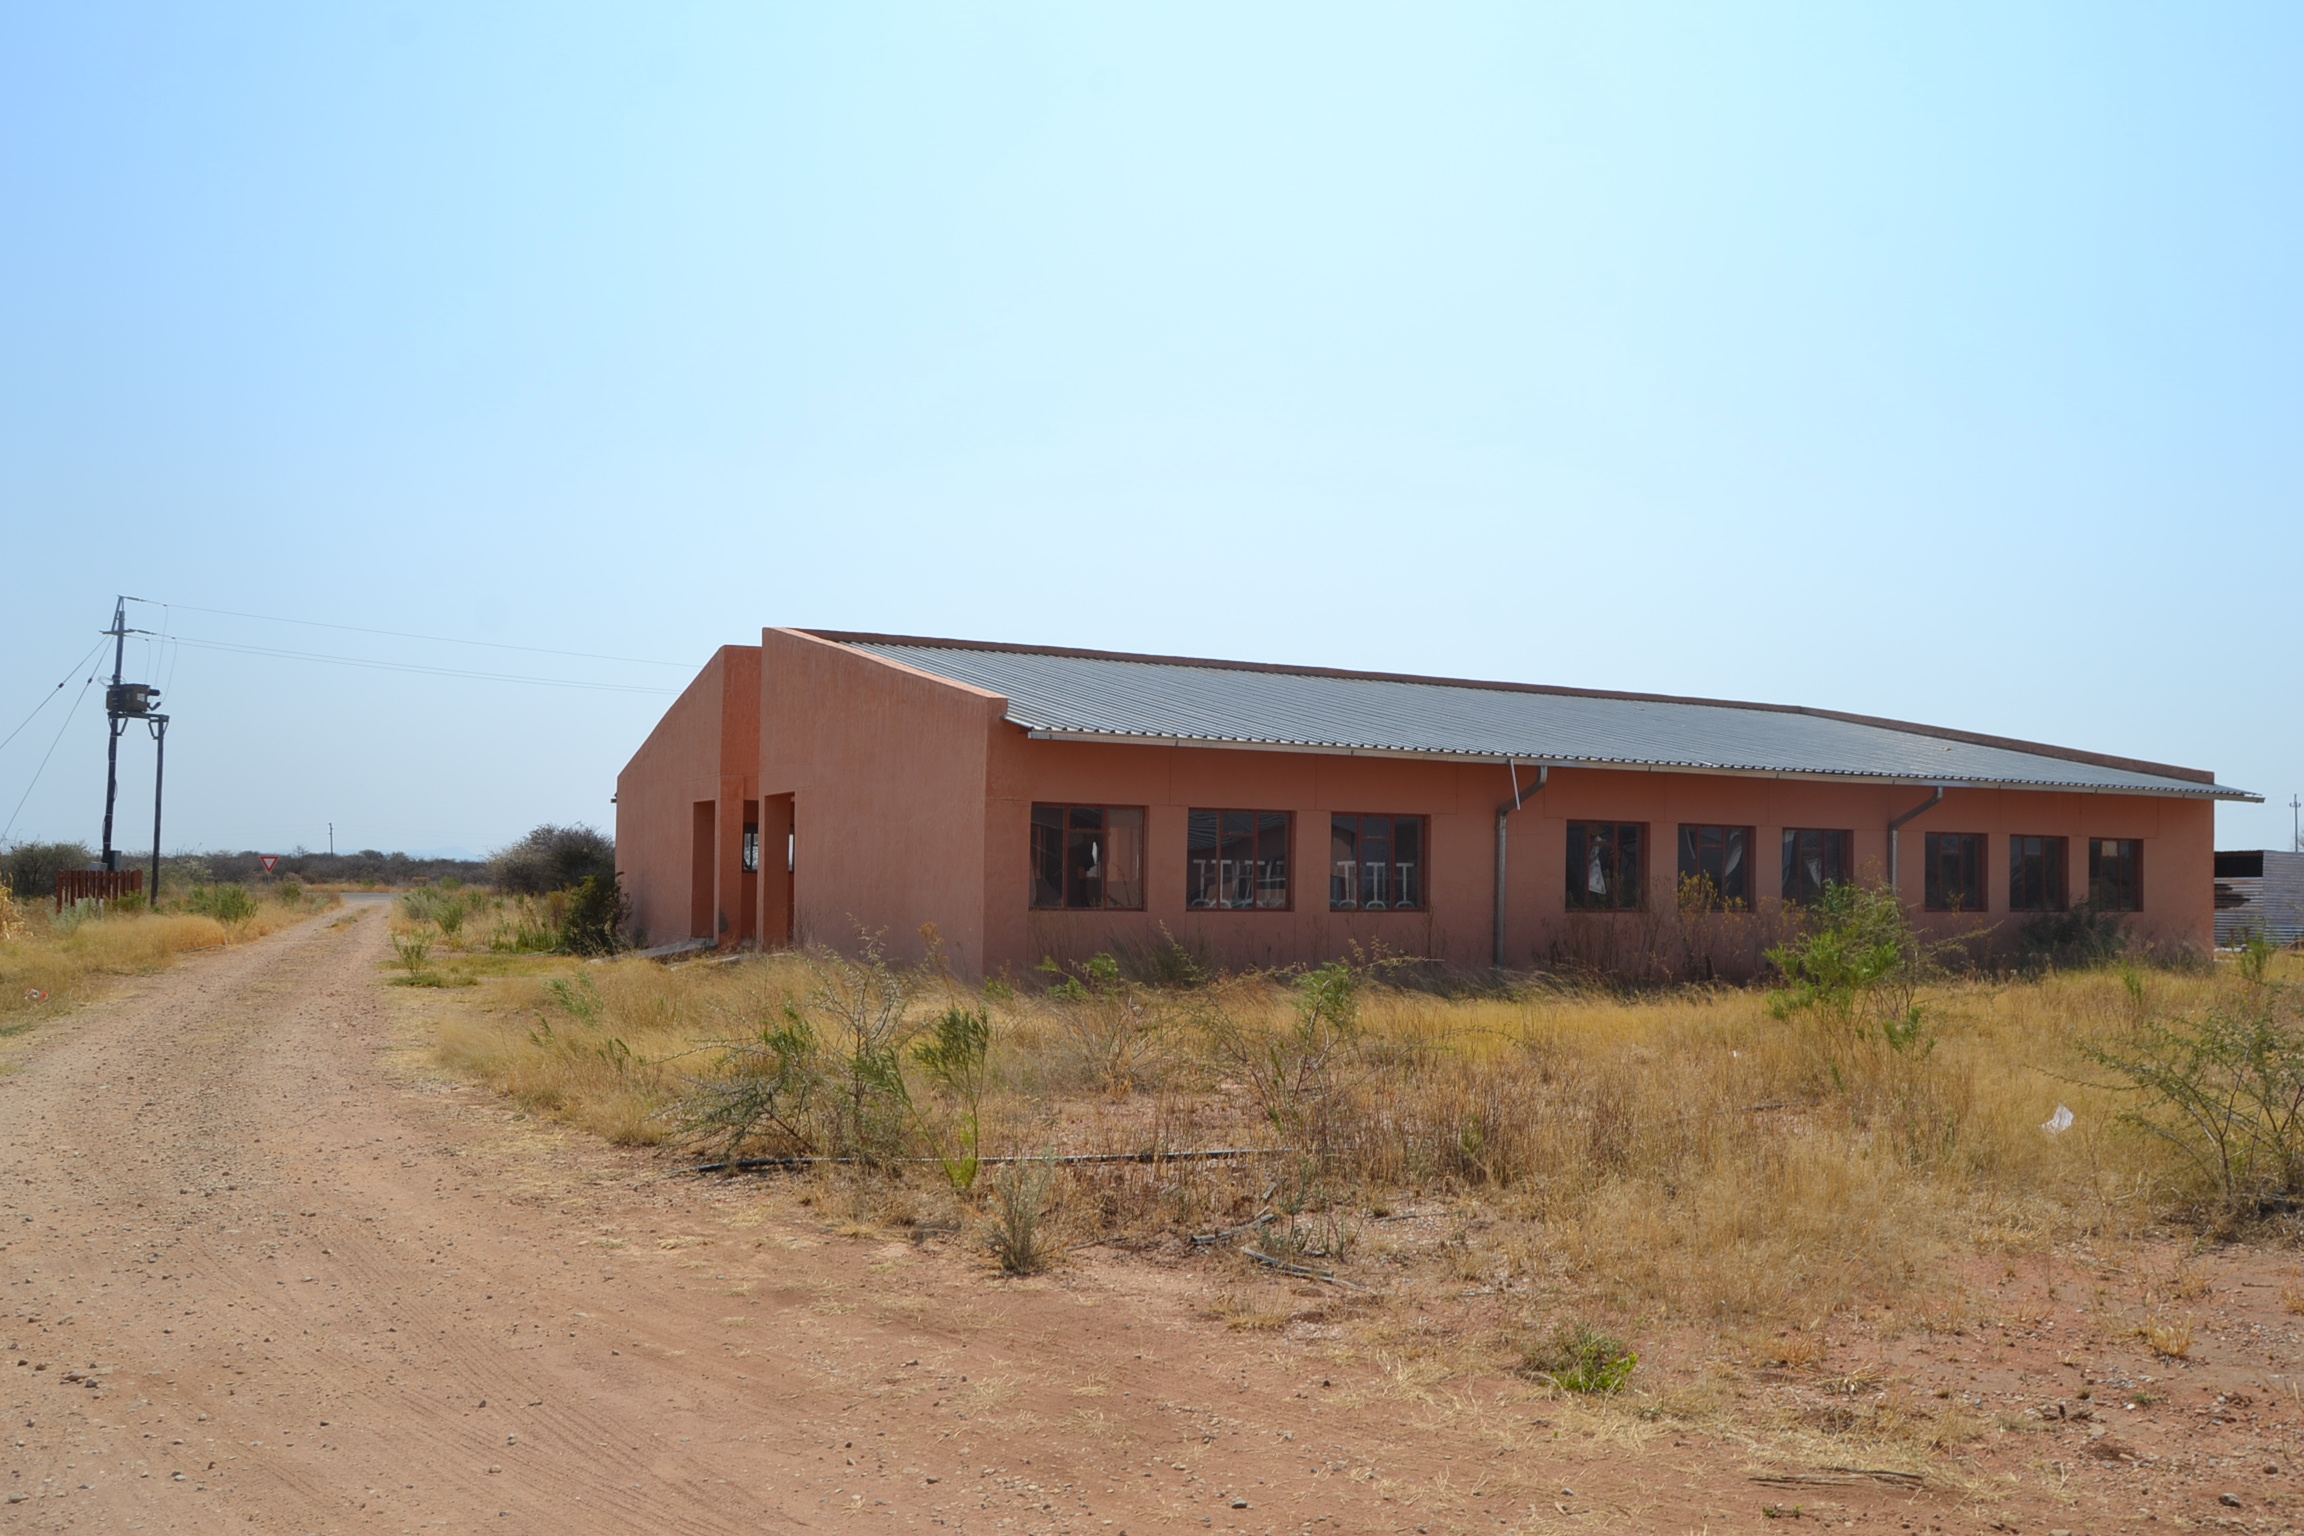 Etunda school nears completion